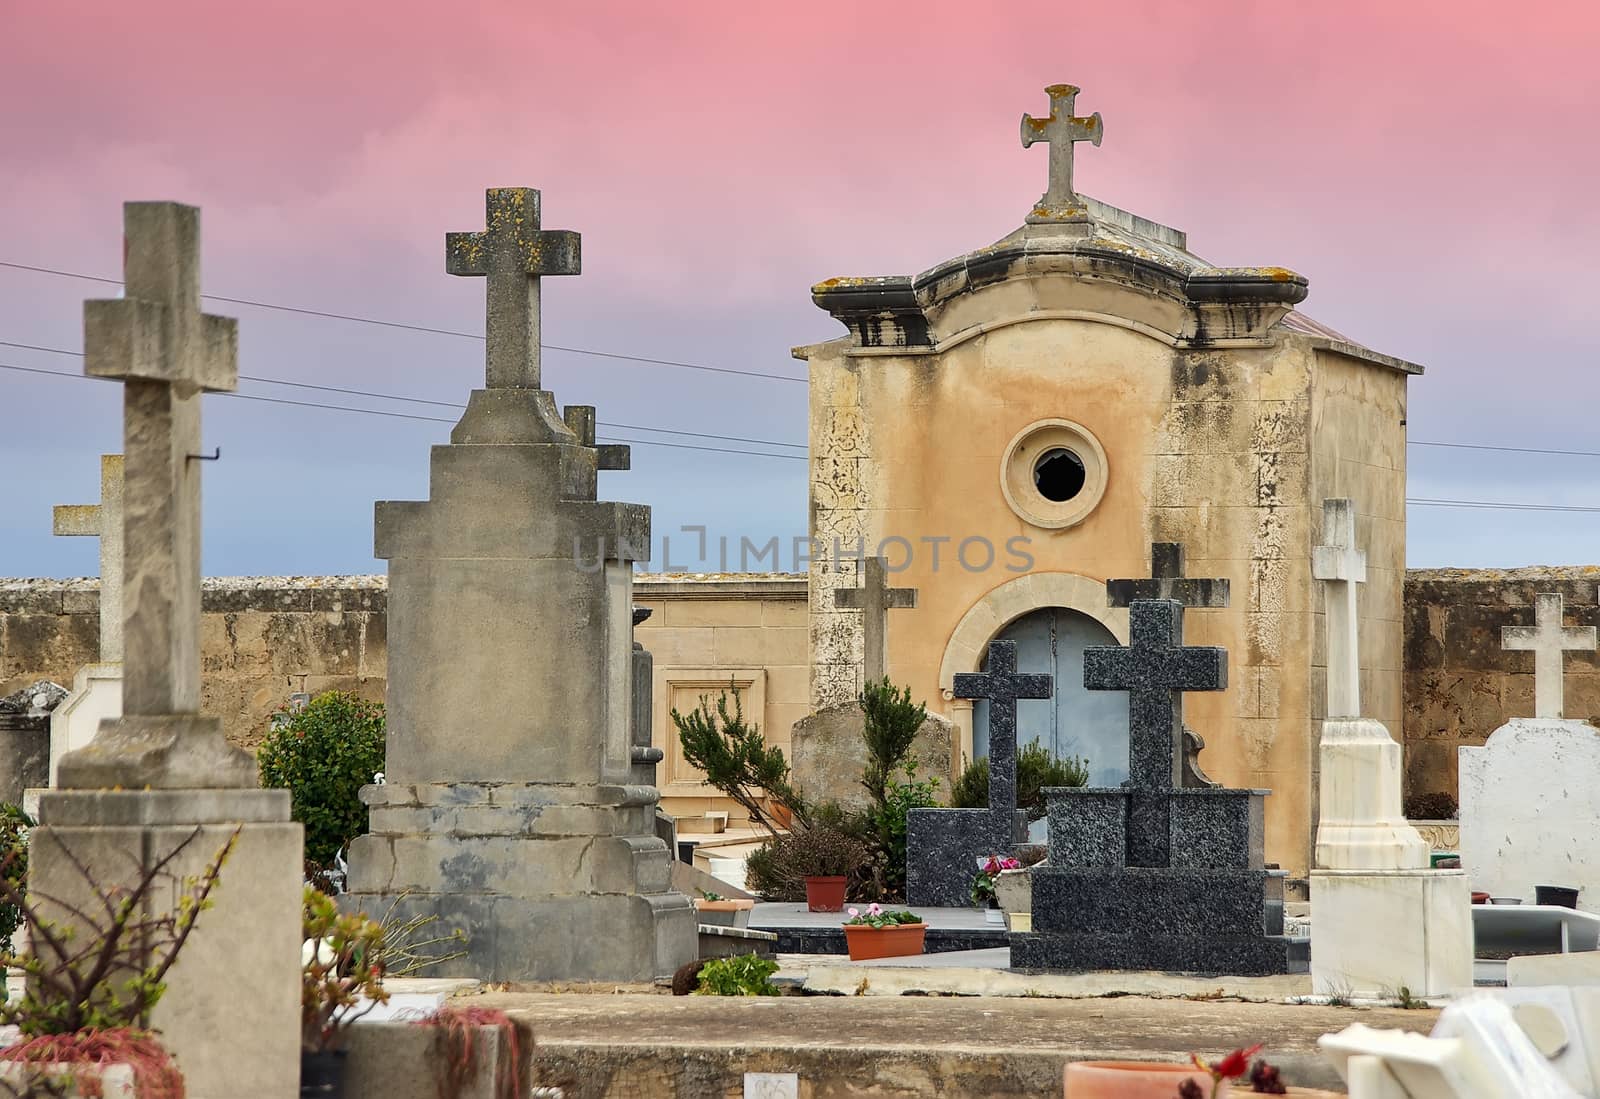 Catholic cemetery of Alcudia (Majorca - Balearic Islands)